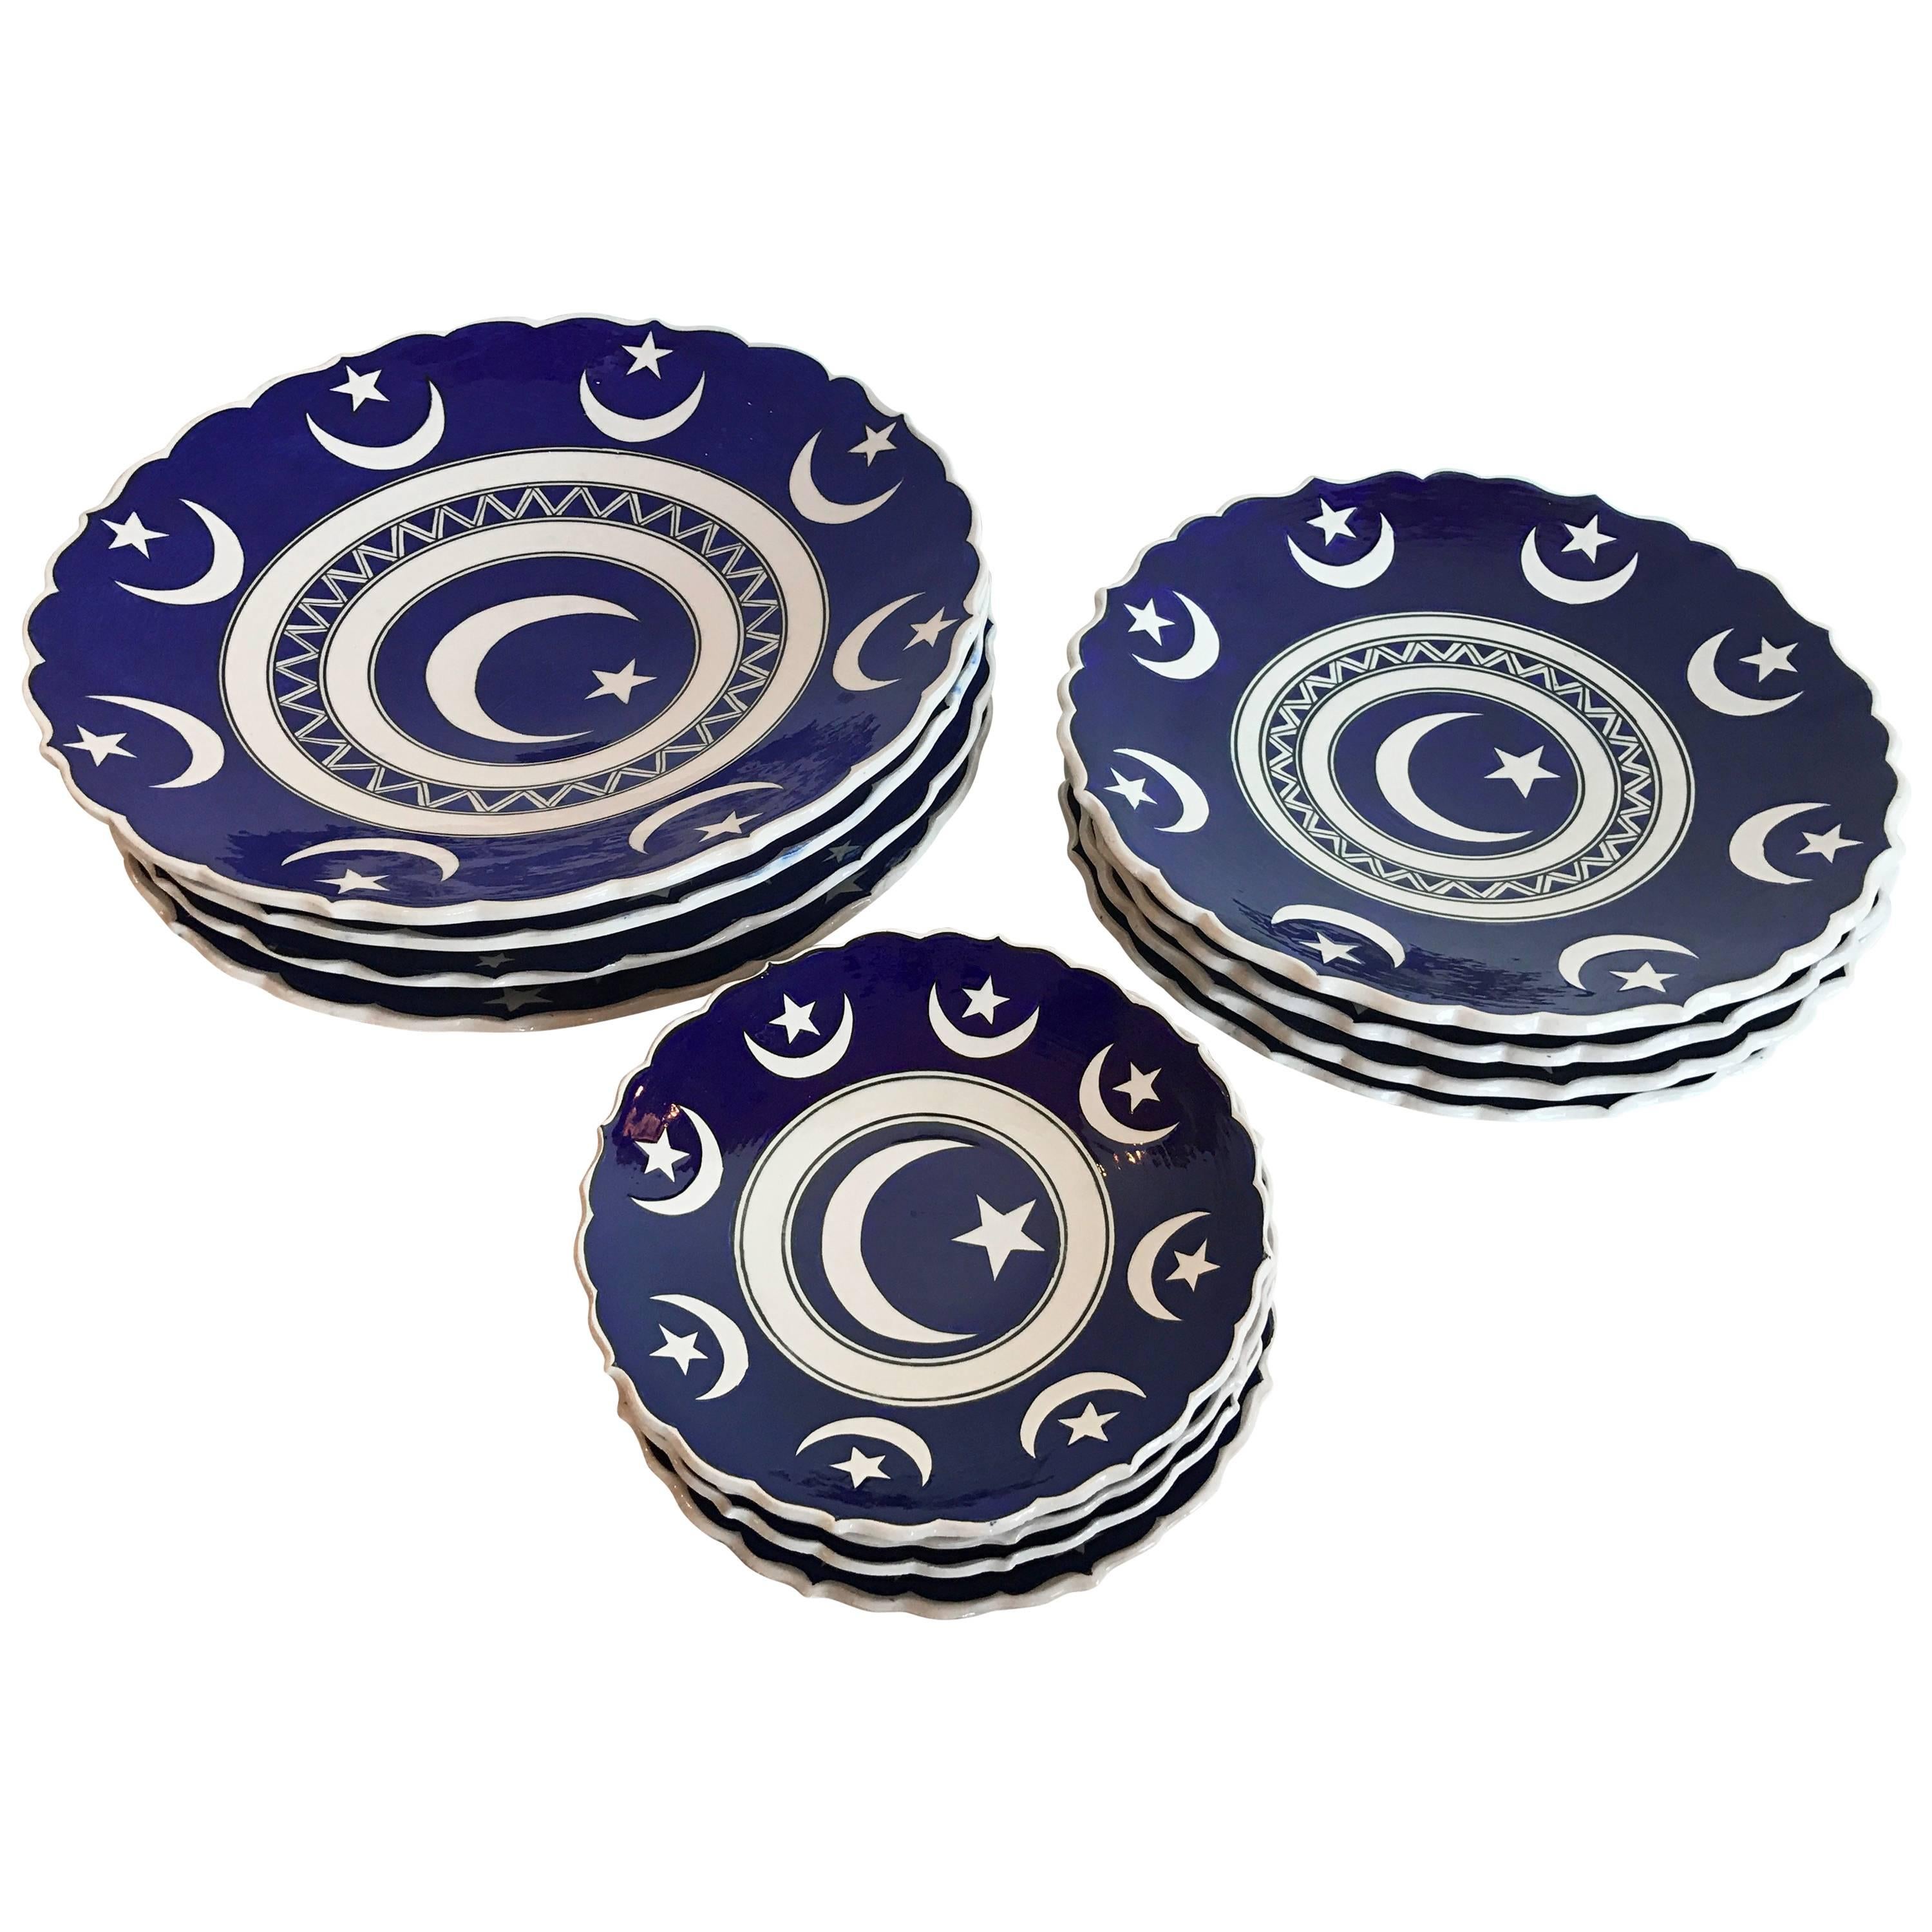 Set of 12 Hand-Painted Turkish Plates